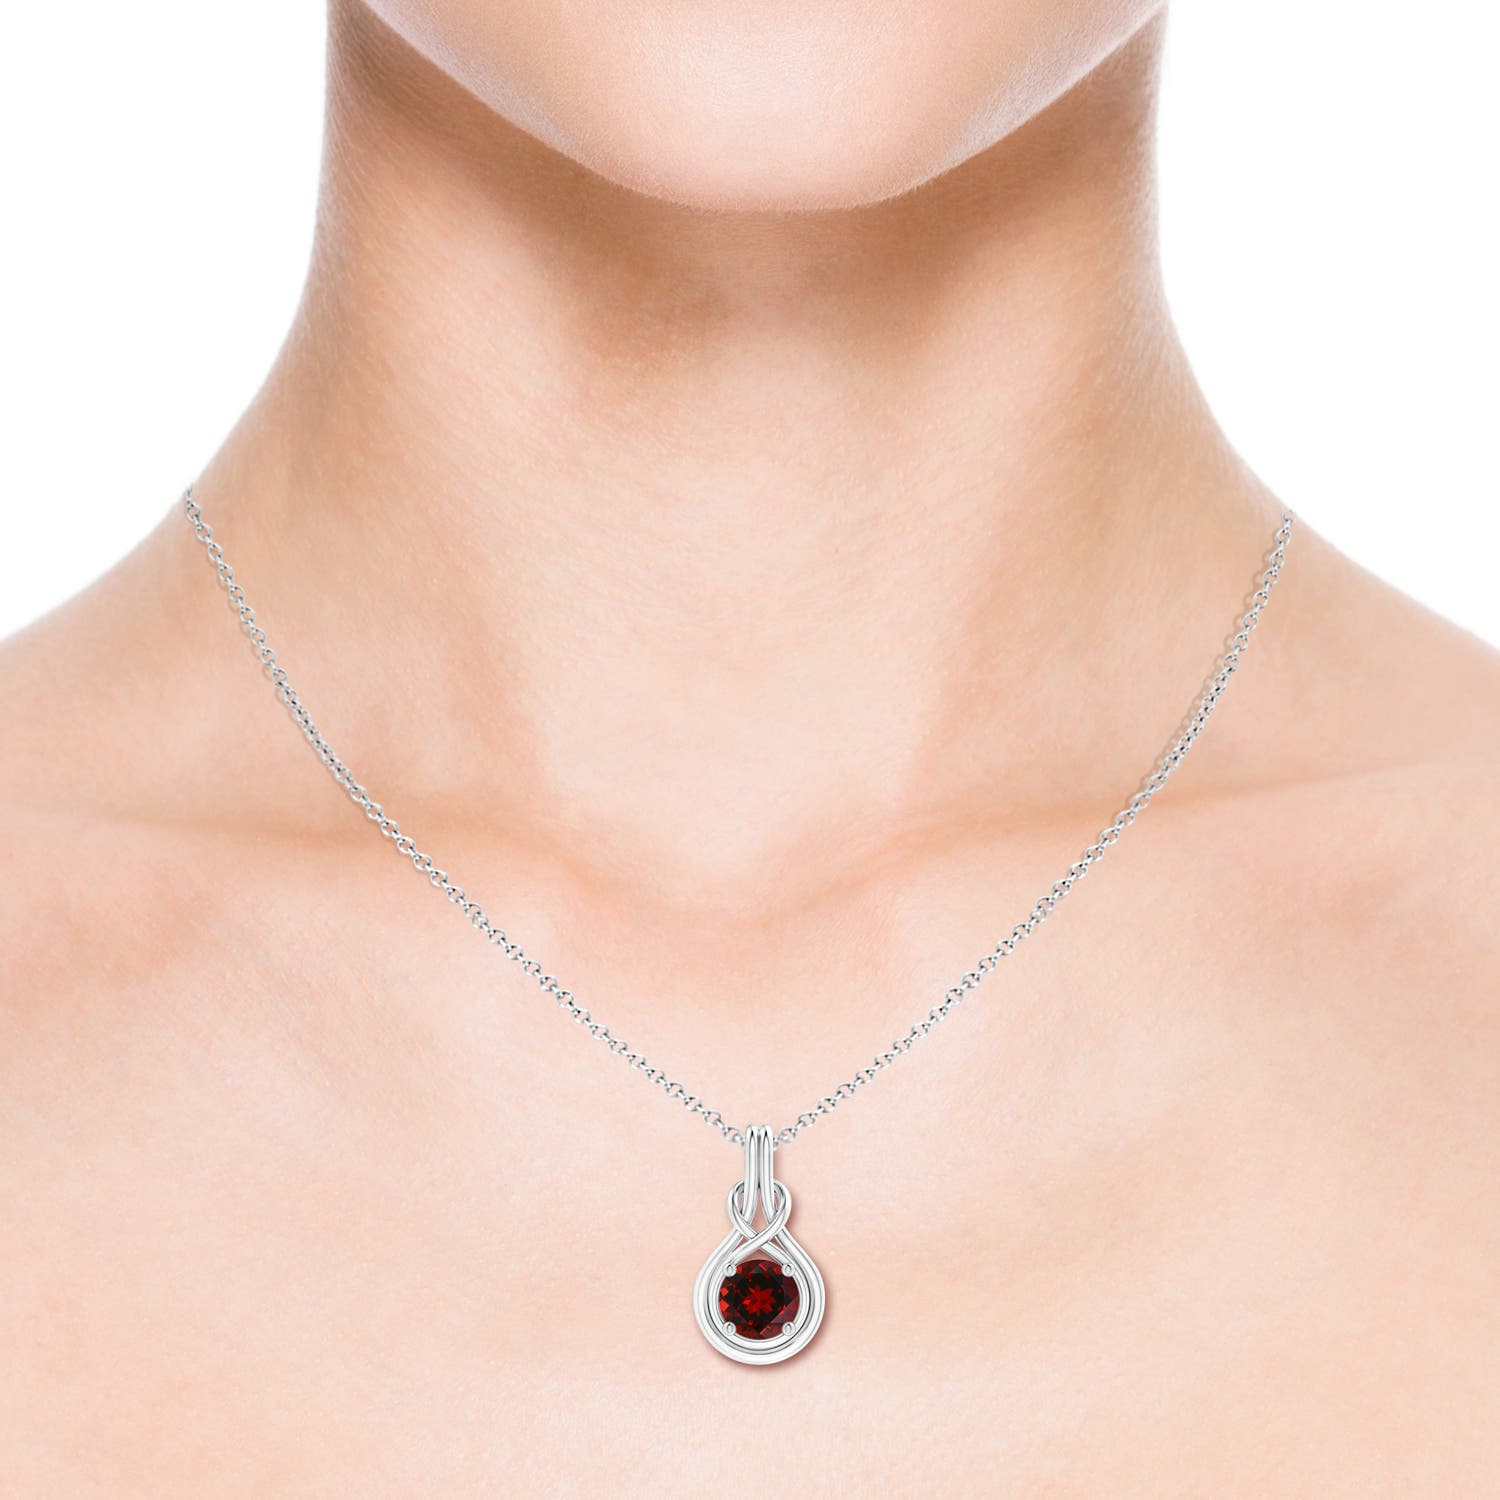 Shop Garnet Pendant Necklaces for Women | Angara